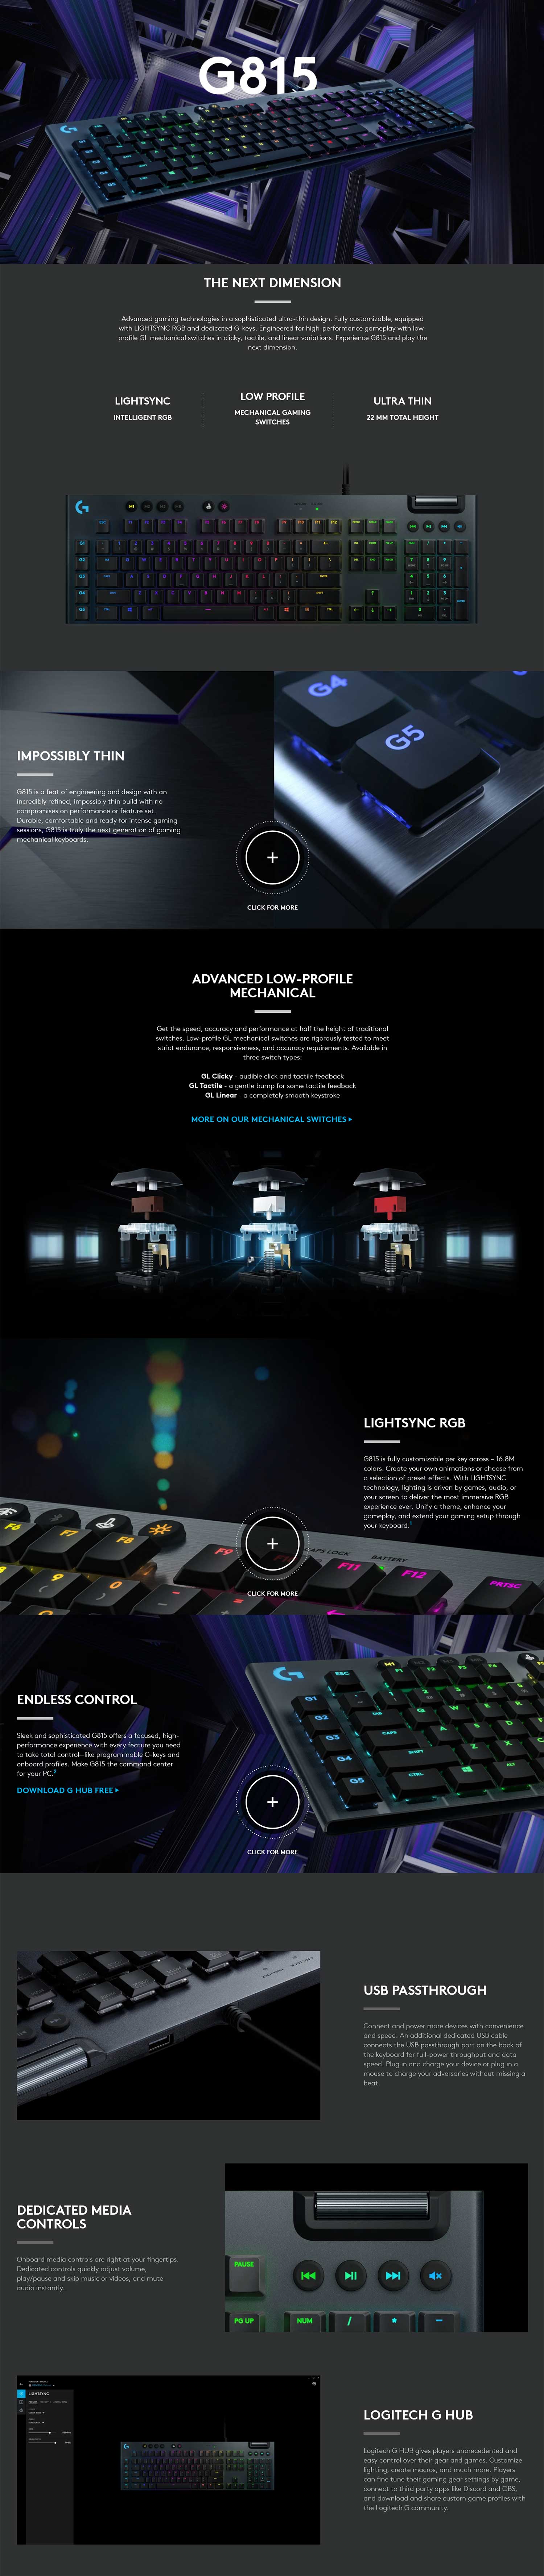 Logitech G815 Lightsync RGB Mechanical Gaming Keyboard - Tactile Switch 920-009222 Details